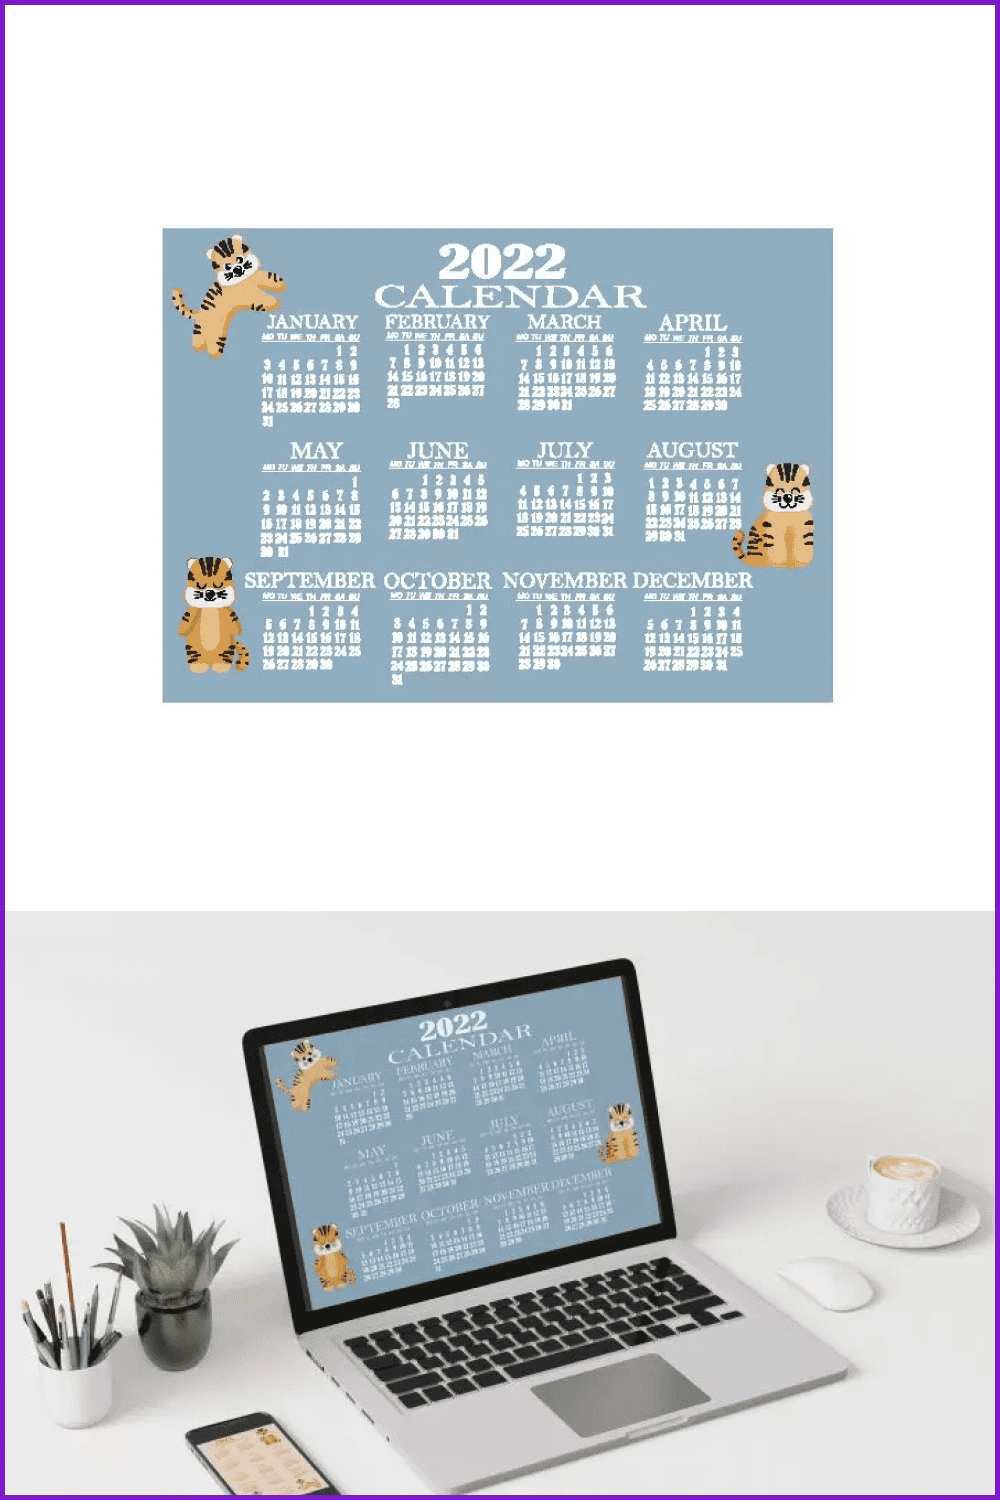 Calendar for 2022 with cute cartoon tigers.